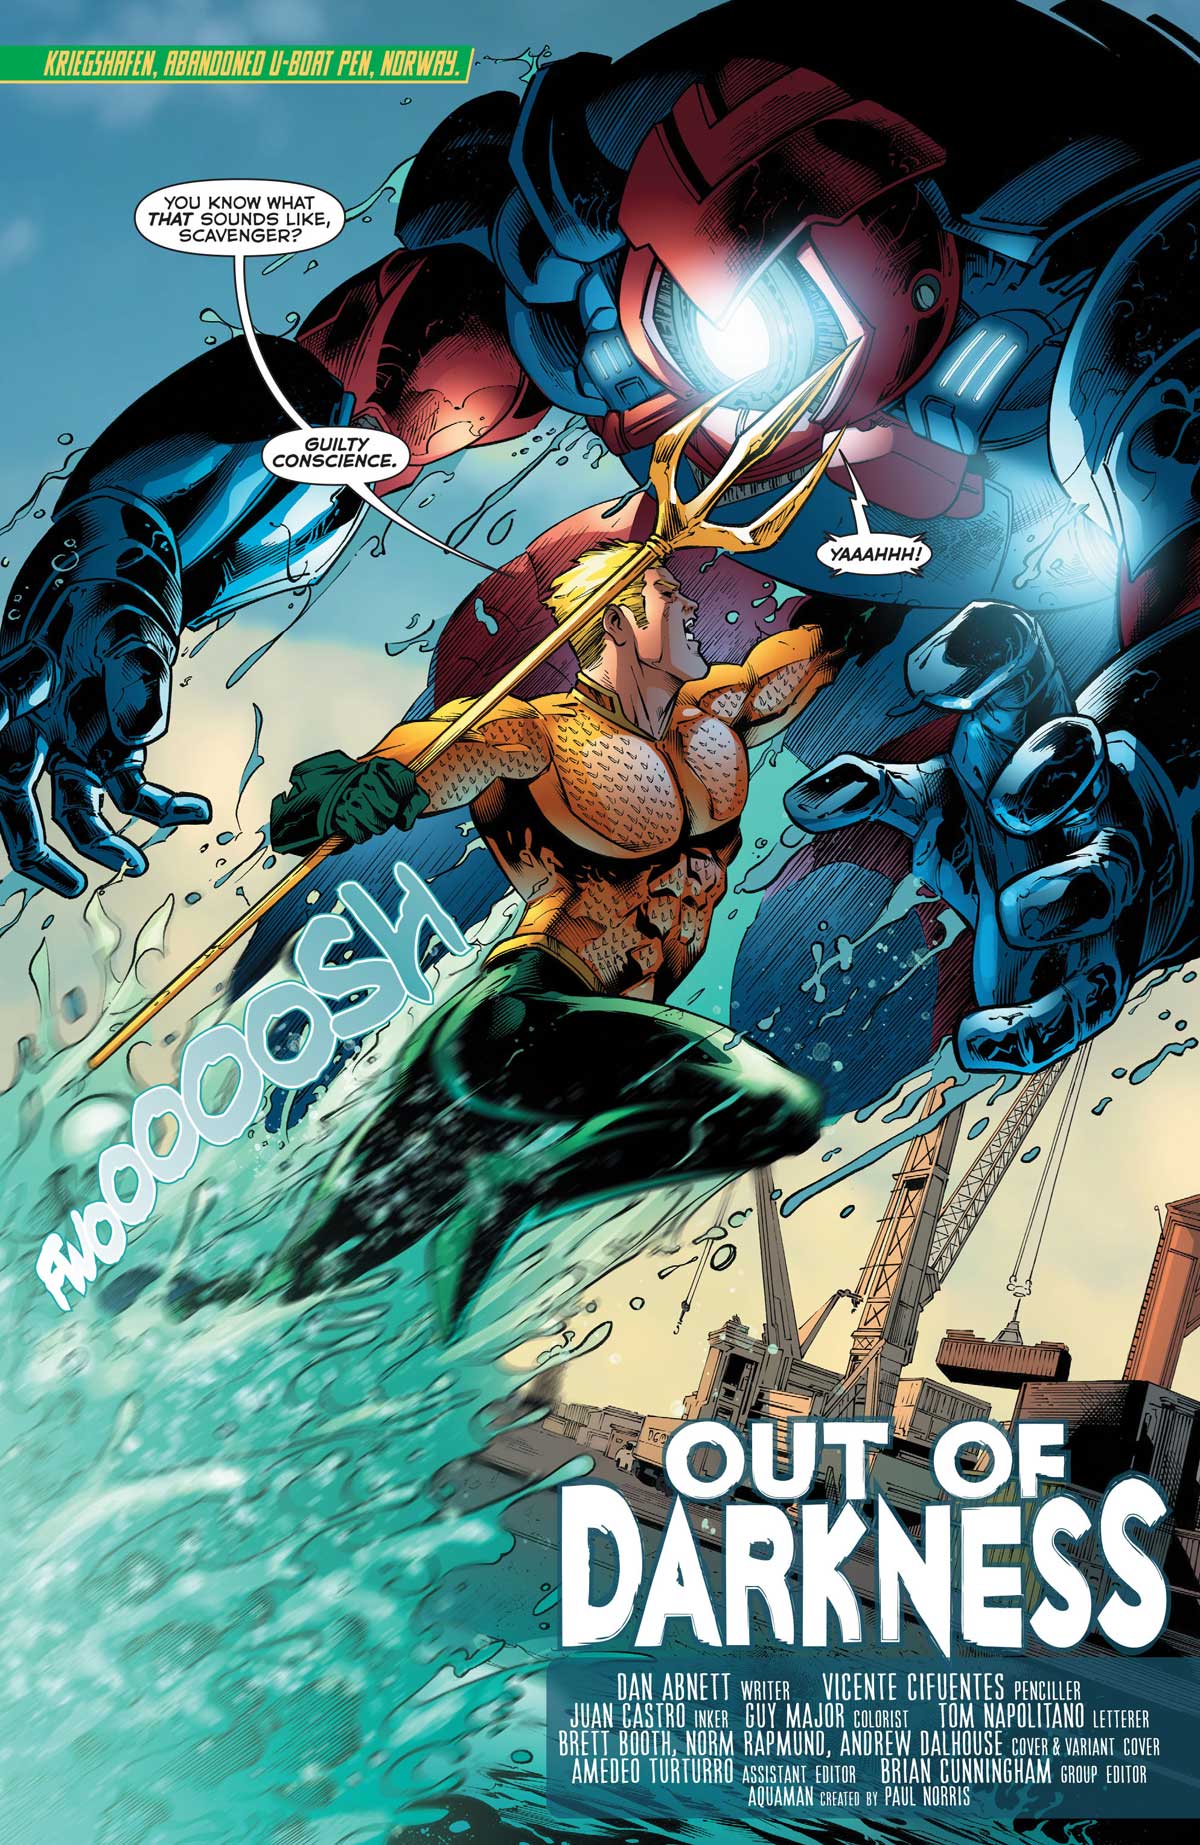 Aquaman #52 by Dan Abnett, Vicente Cifuentes and Juan Castro